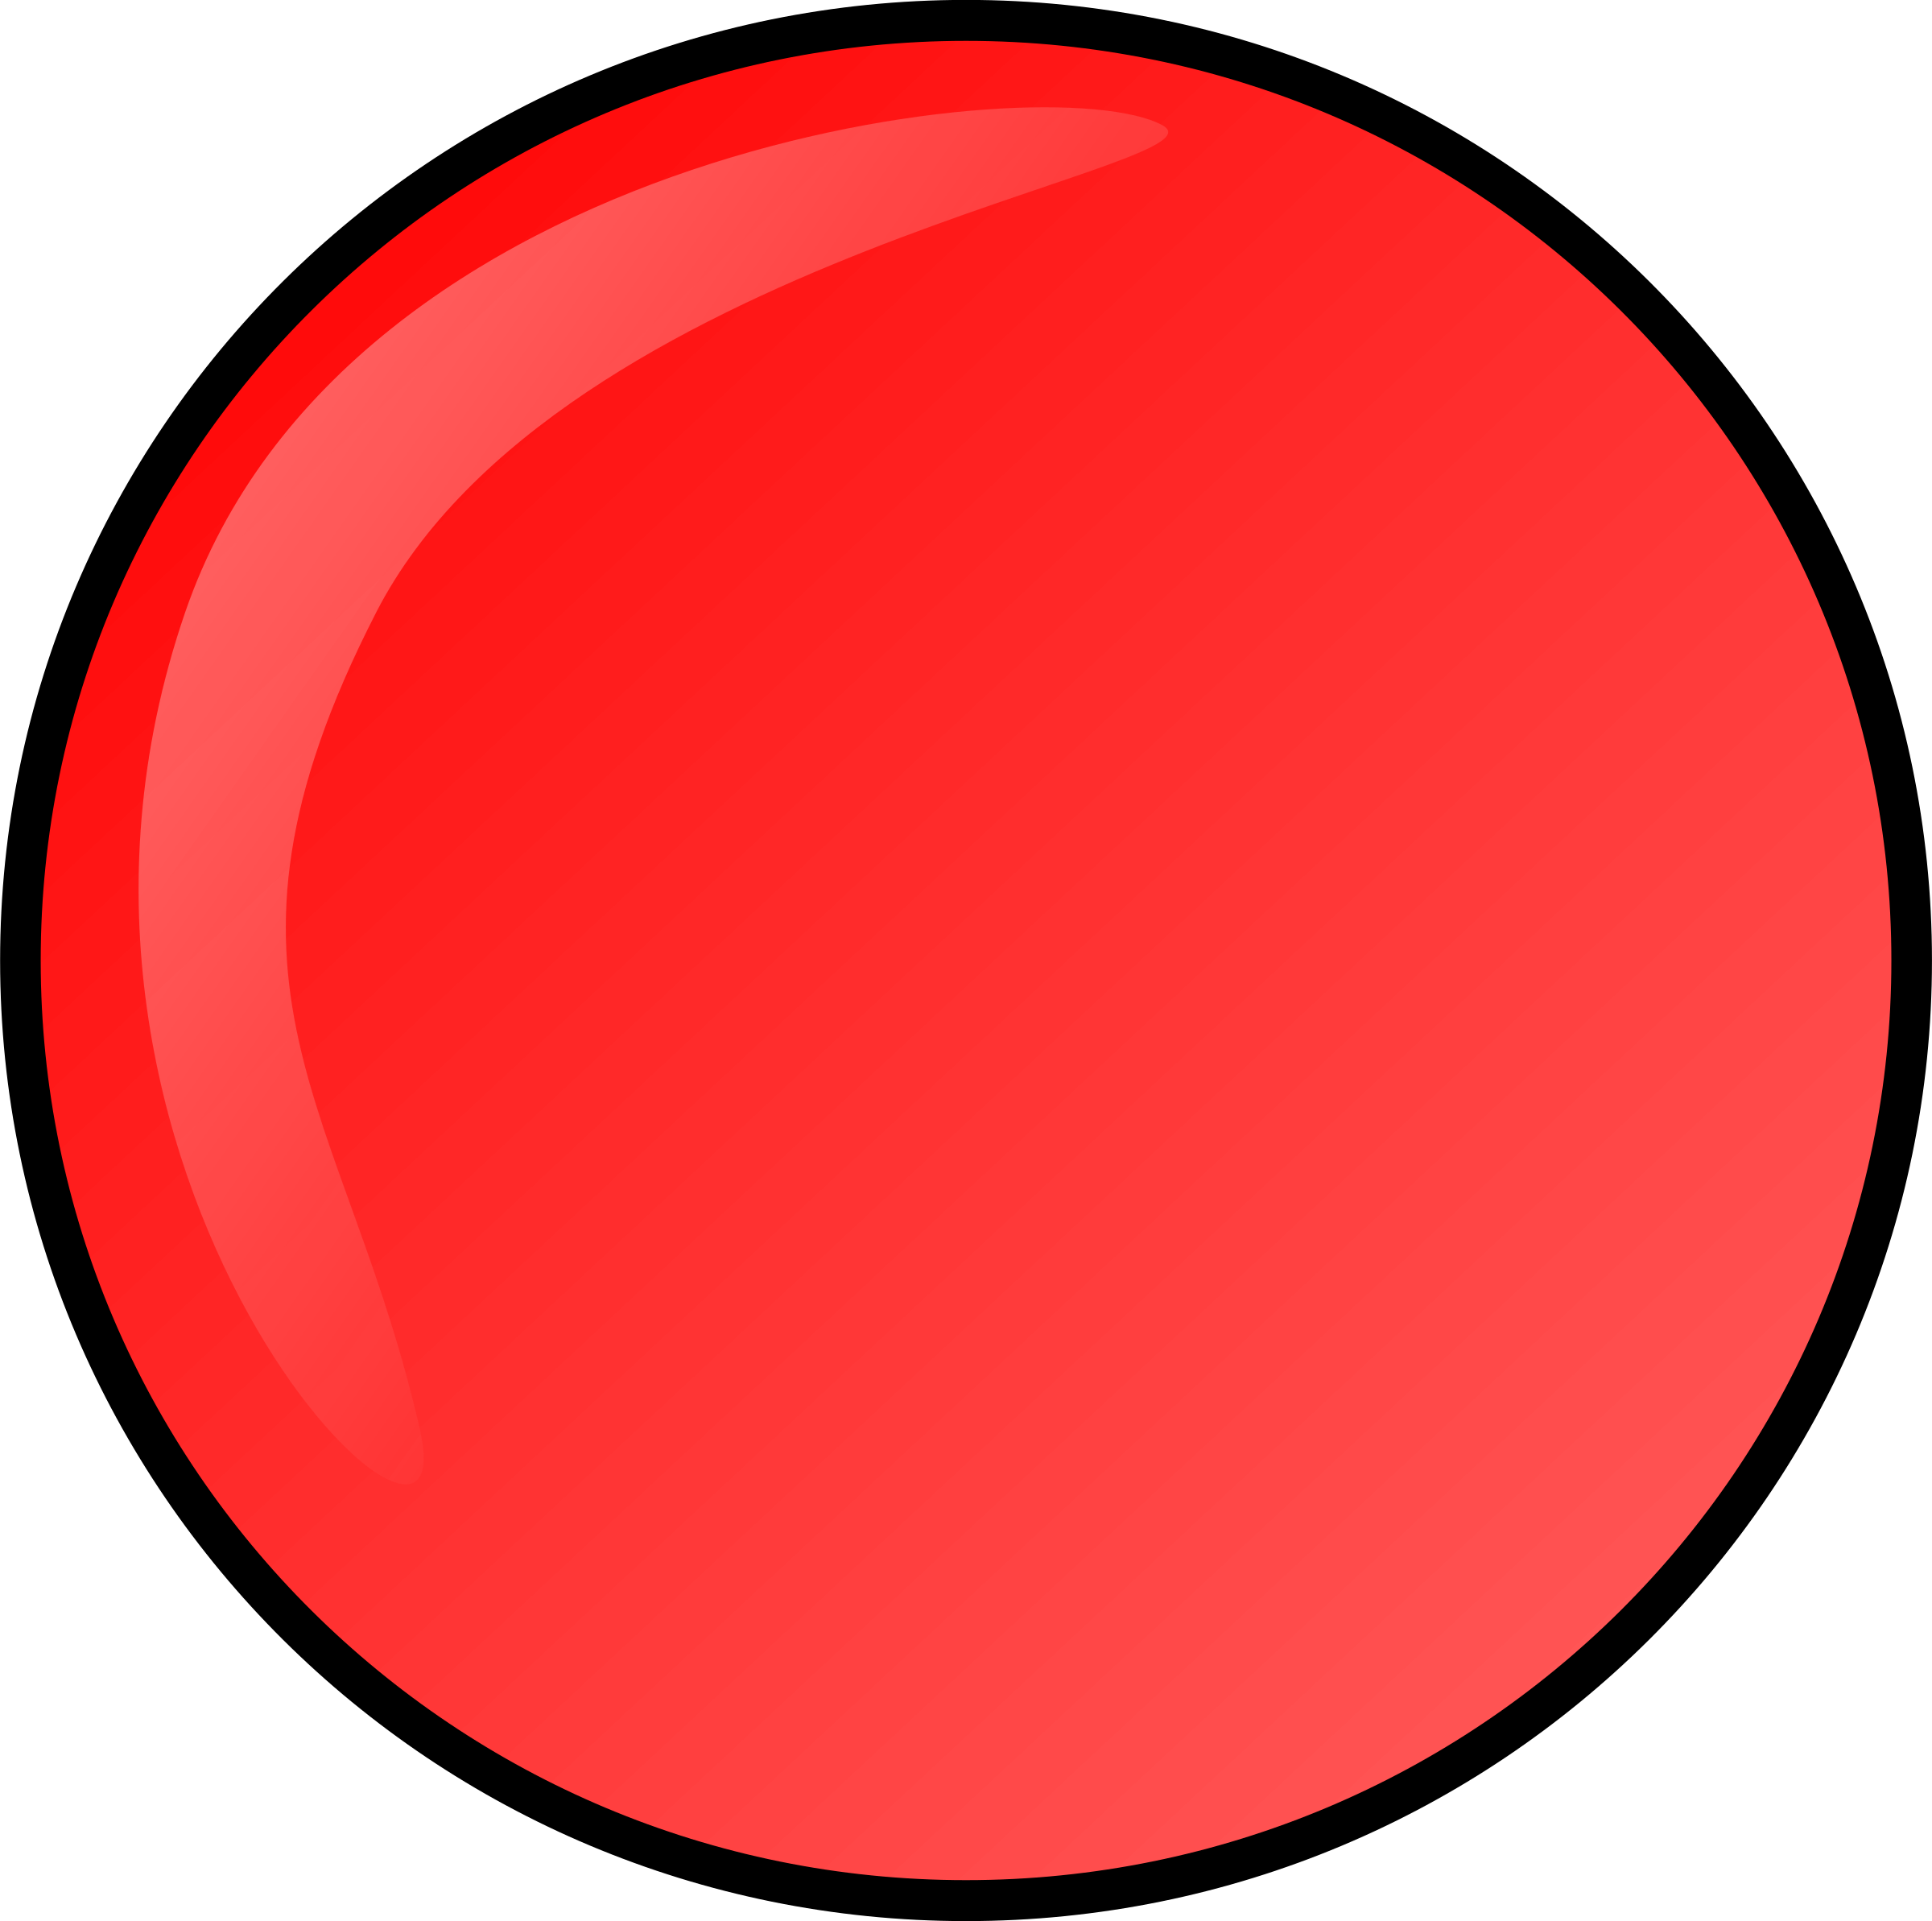 Картинка круга. Красный круг. Круг красного цвета. Красный кружок. Красные кружочки.